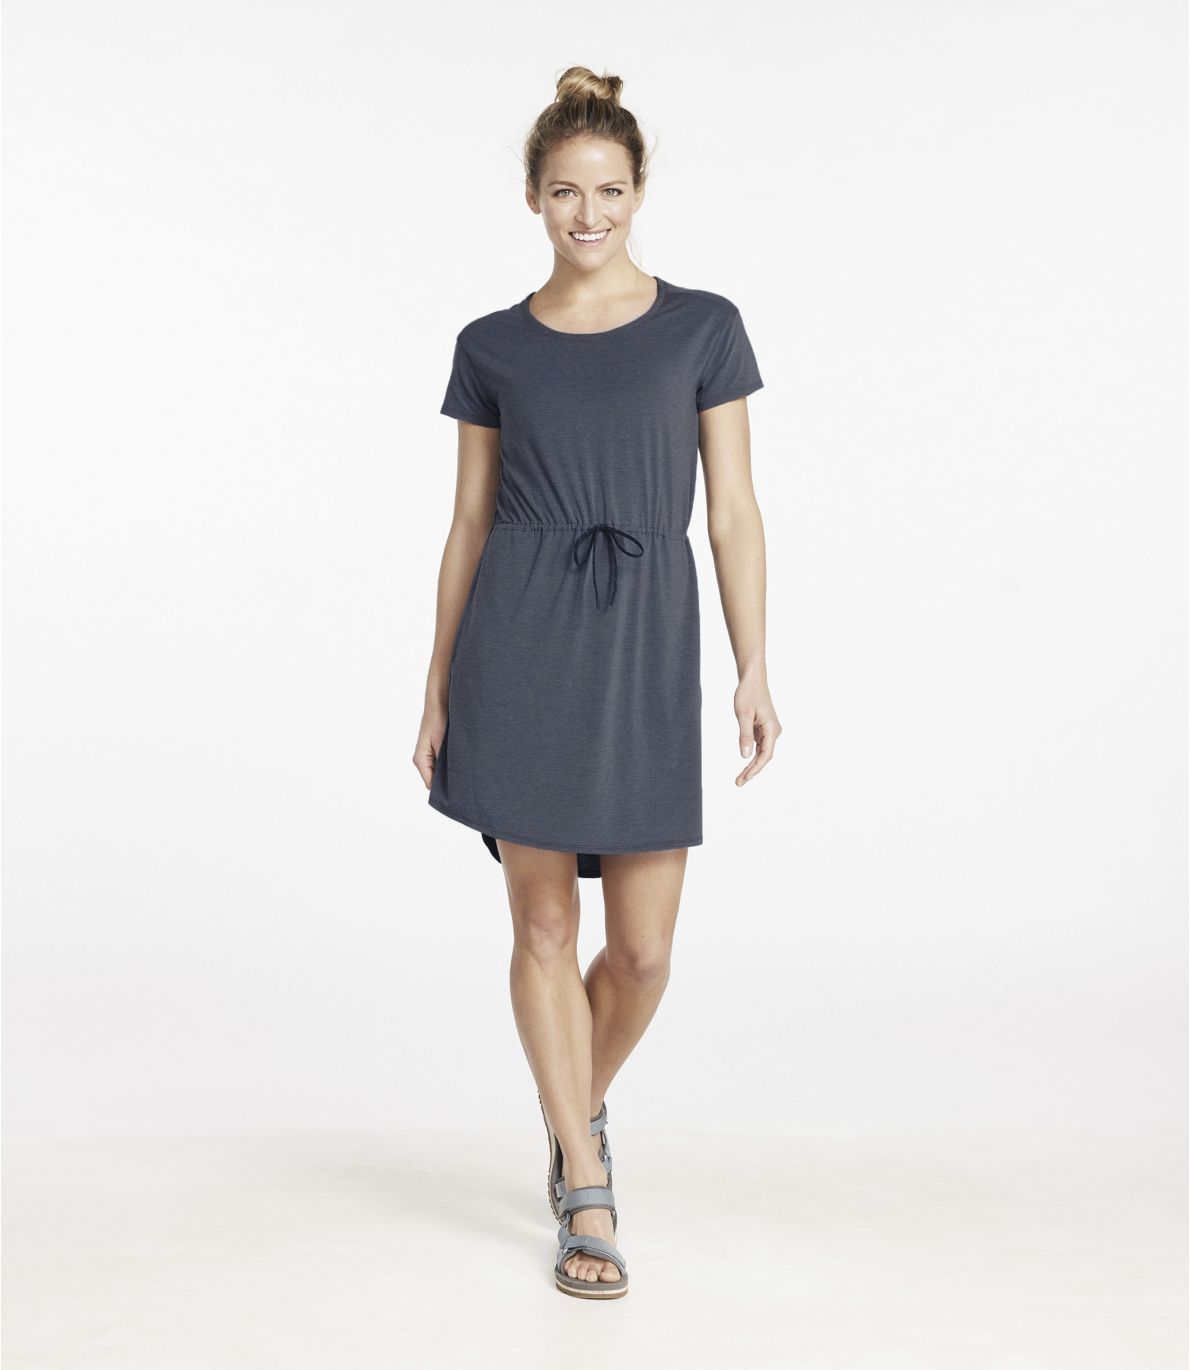 Women's Everyday SunSmart® Knit Dress